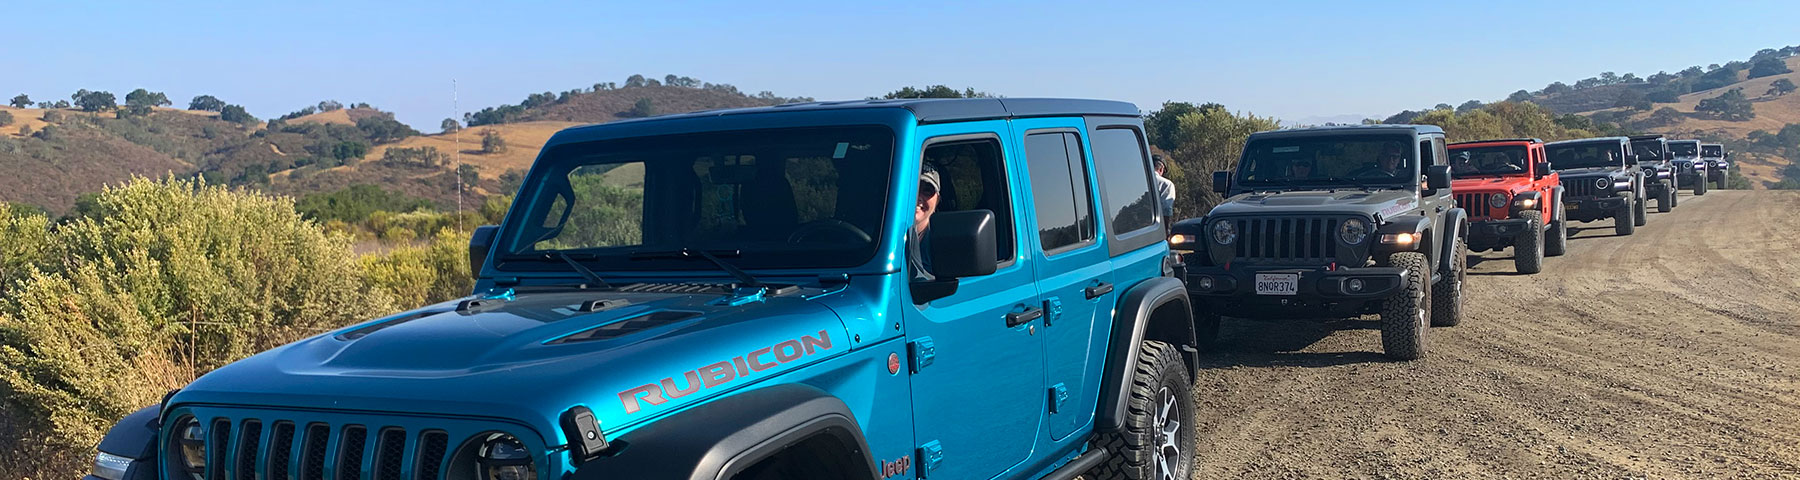 hollister california jeep adventure